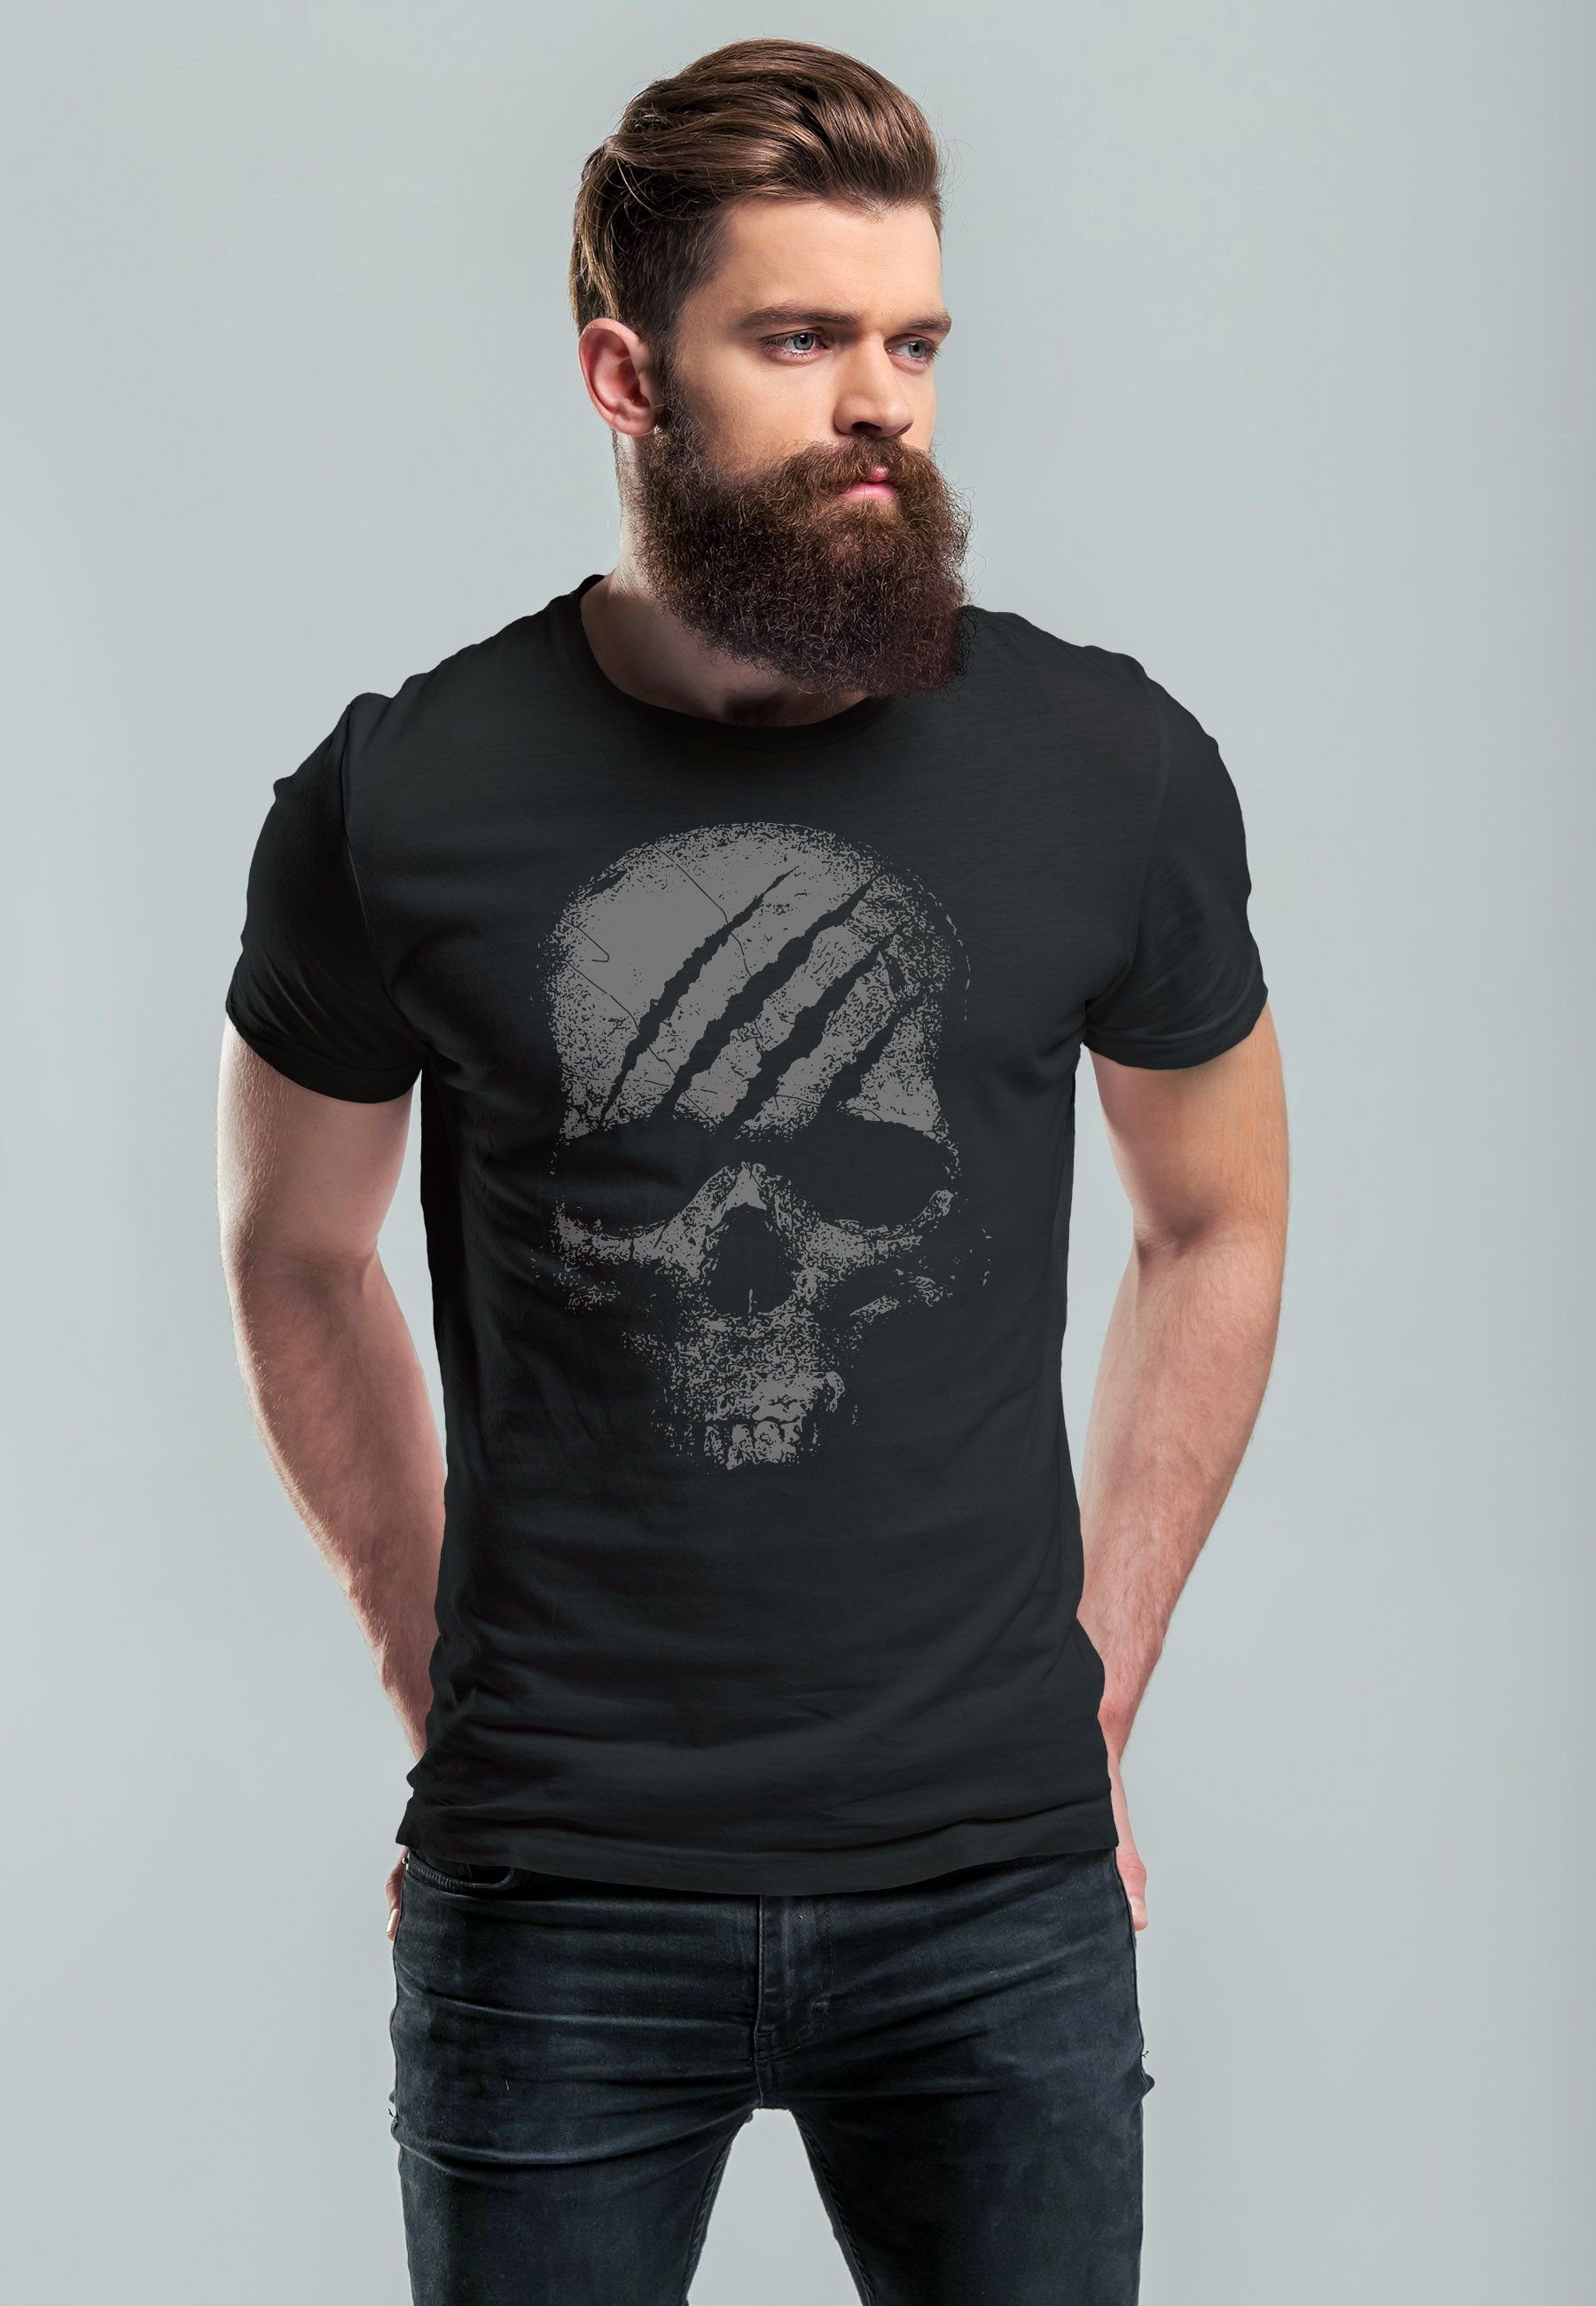 Aufdruck Print Fas schwarz Skull Totenschädel Herren Skelett mit T-Shirt Neverless Print-Shirt Print Totenkopf